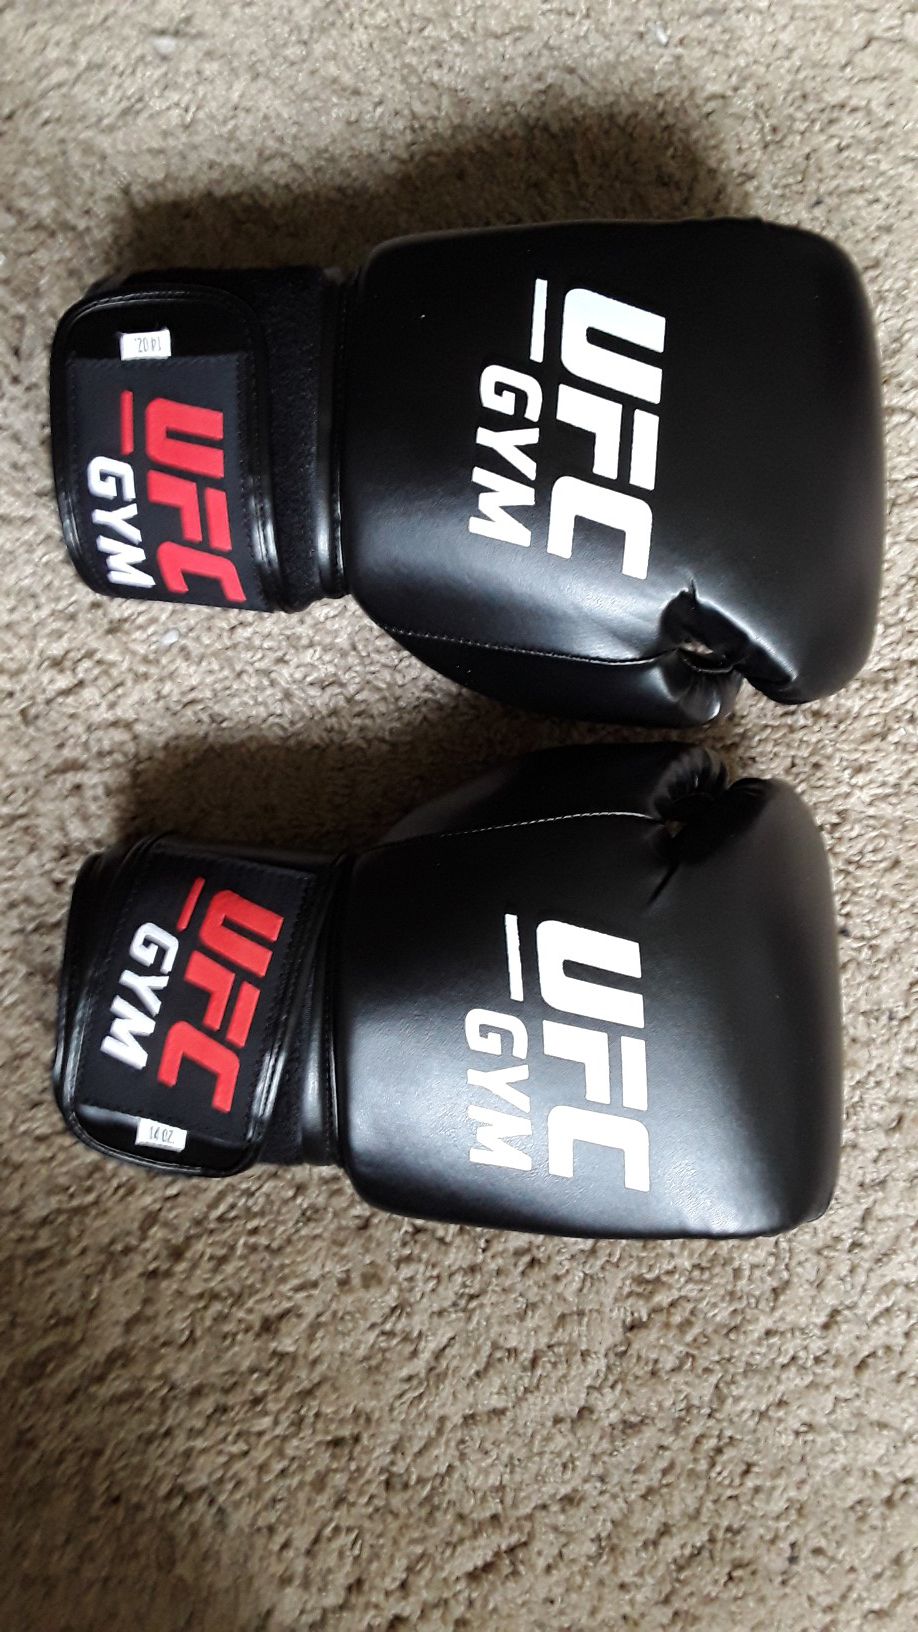 14oz UFC boxing gloves